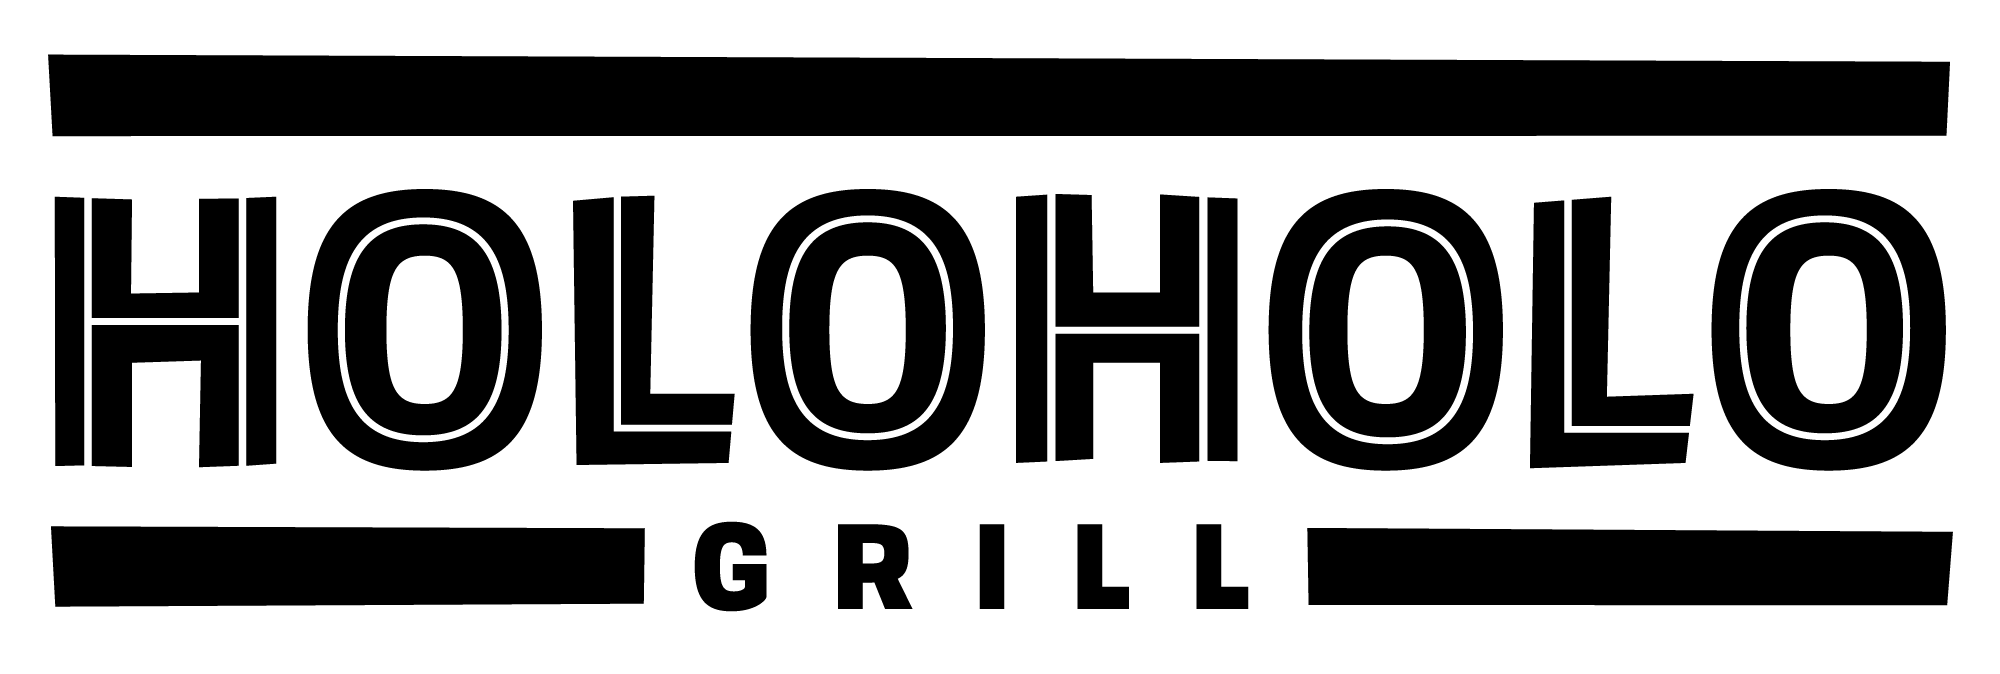 Holoholo grill logo